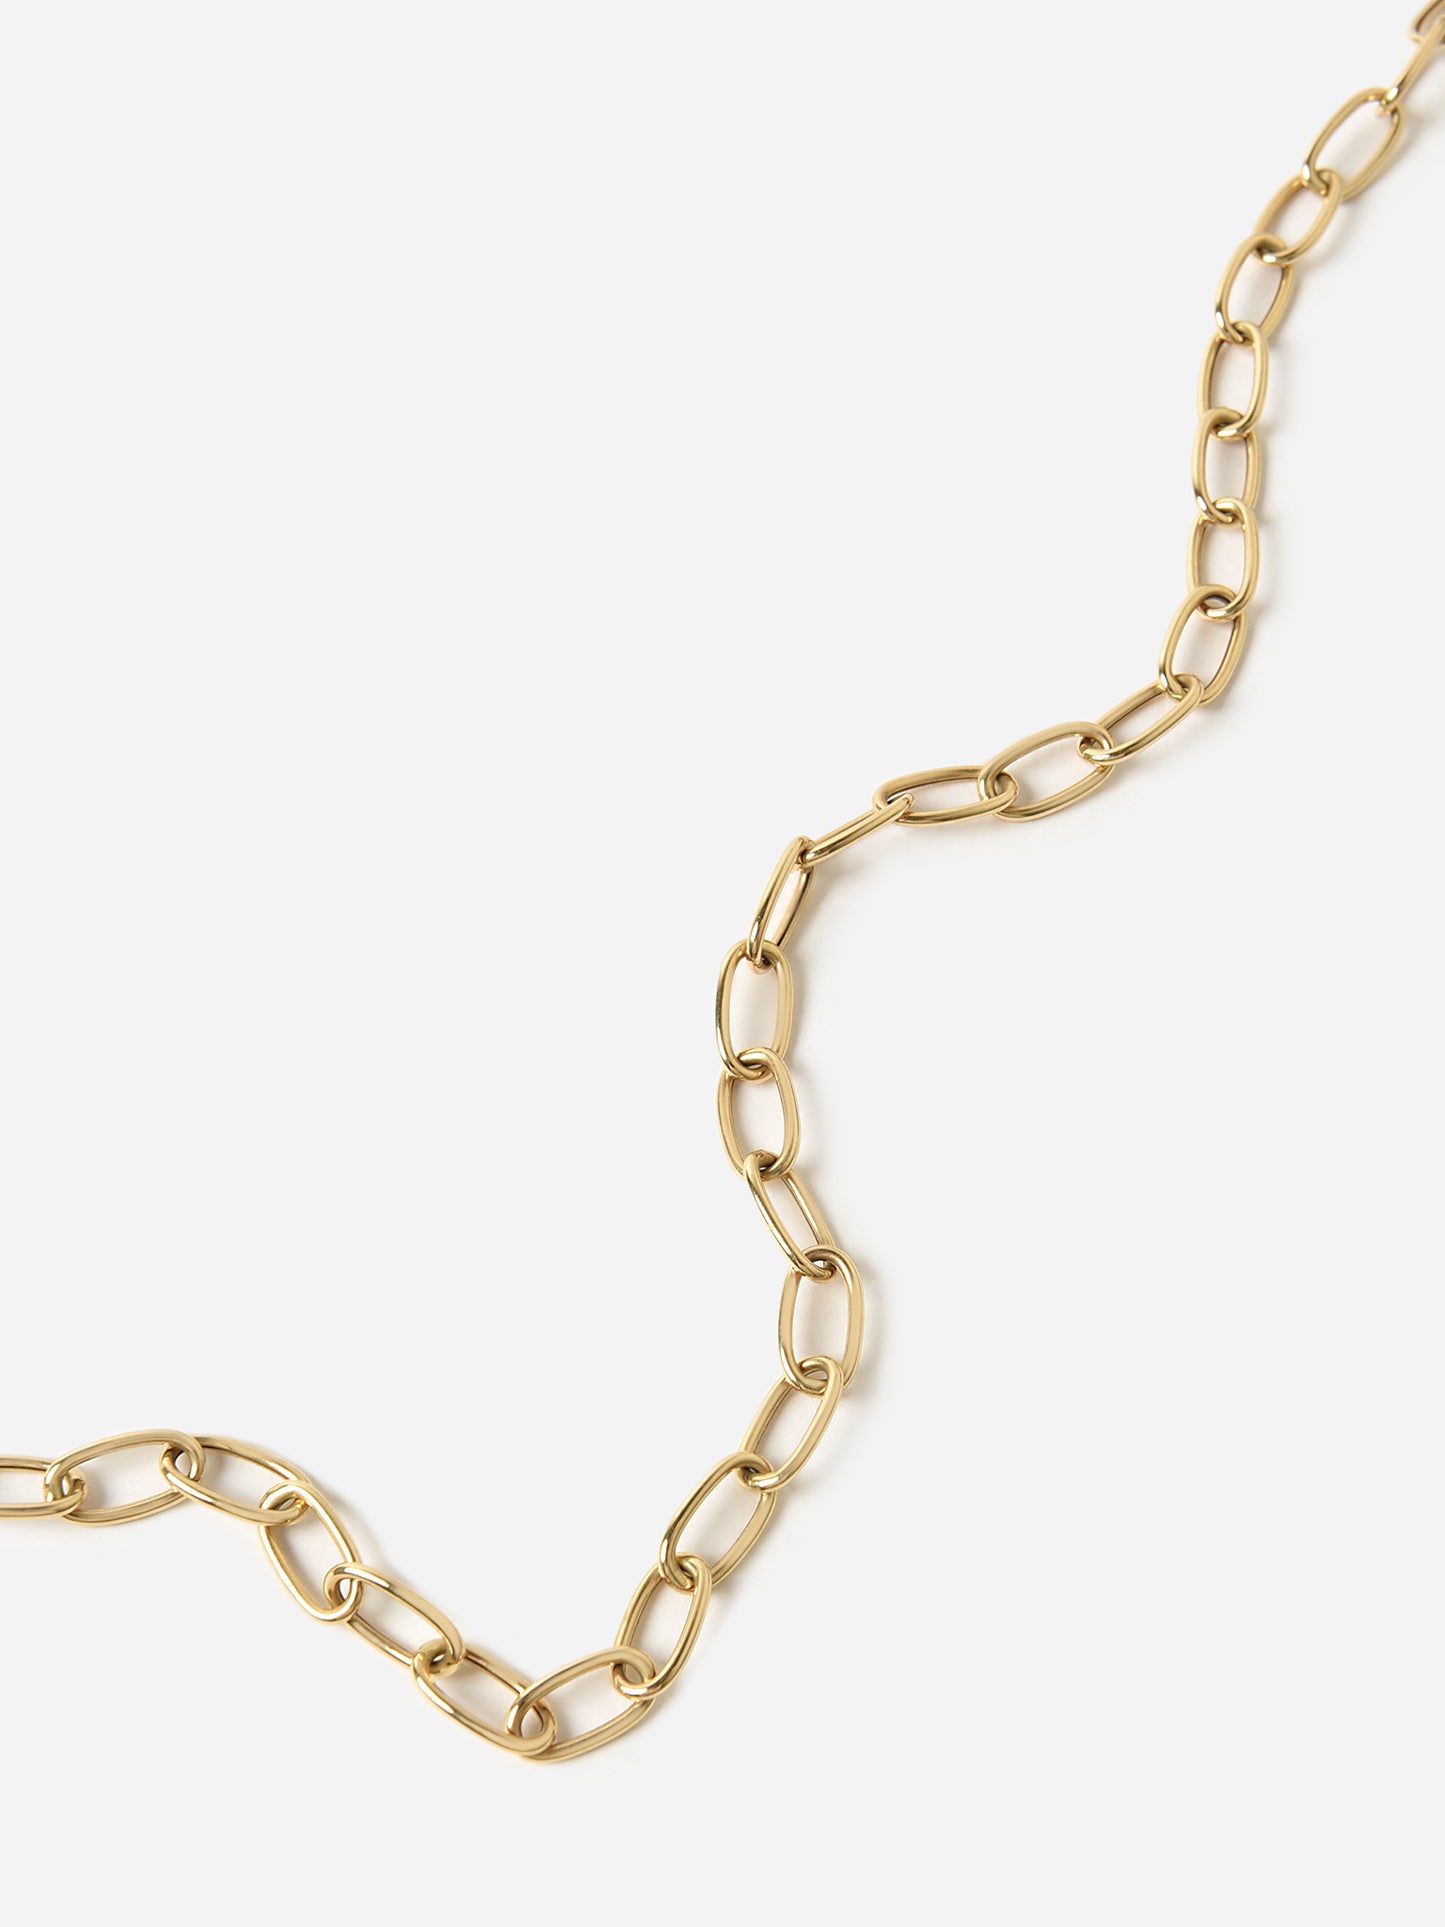 S. Bell Women's Dana Chain Necklace